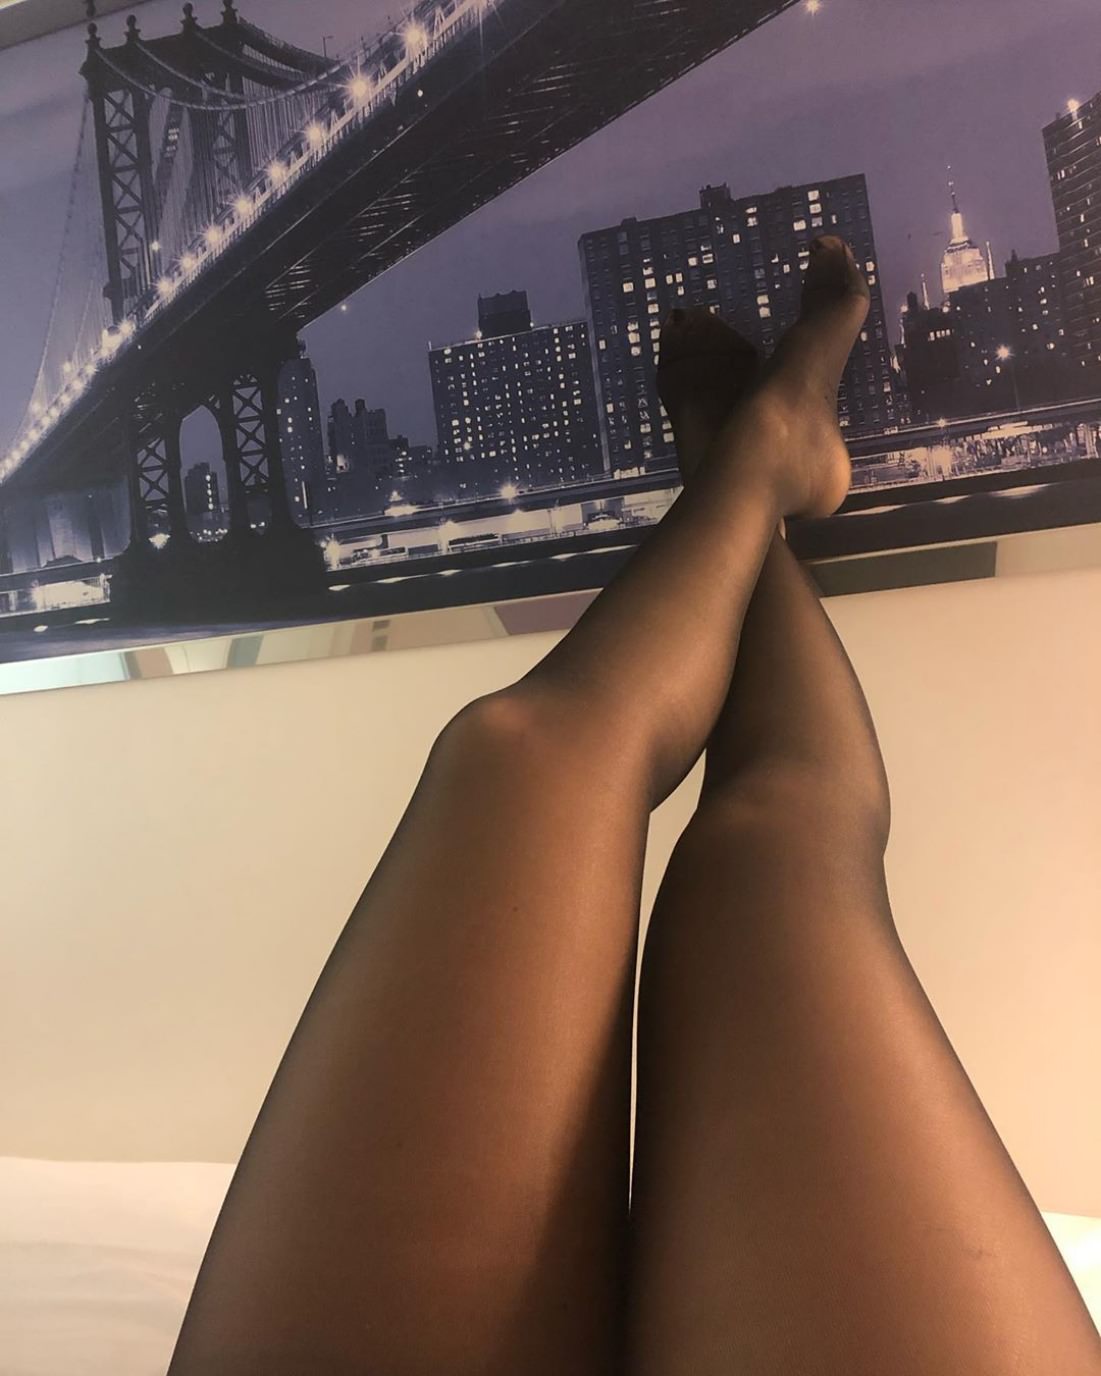 Legs for days